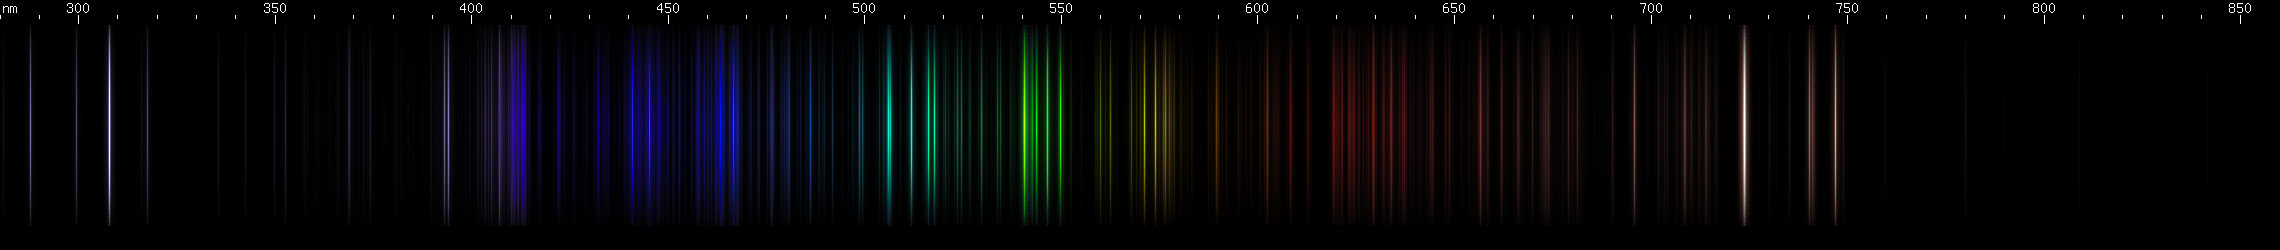 Spectral lines of Iodine.